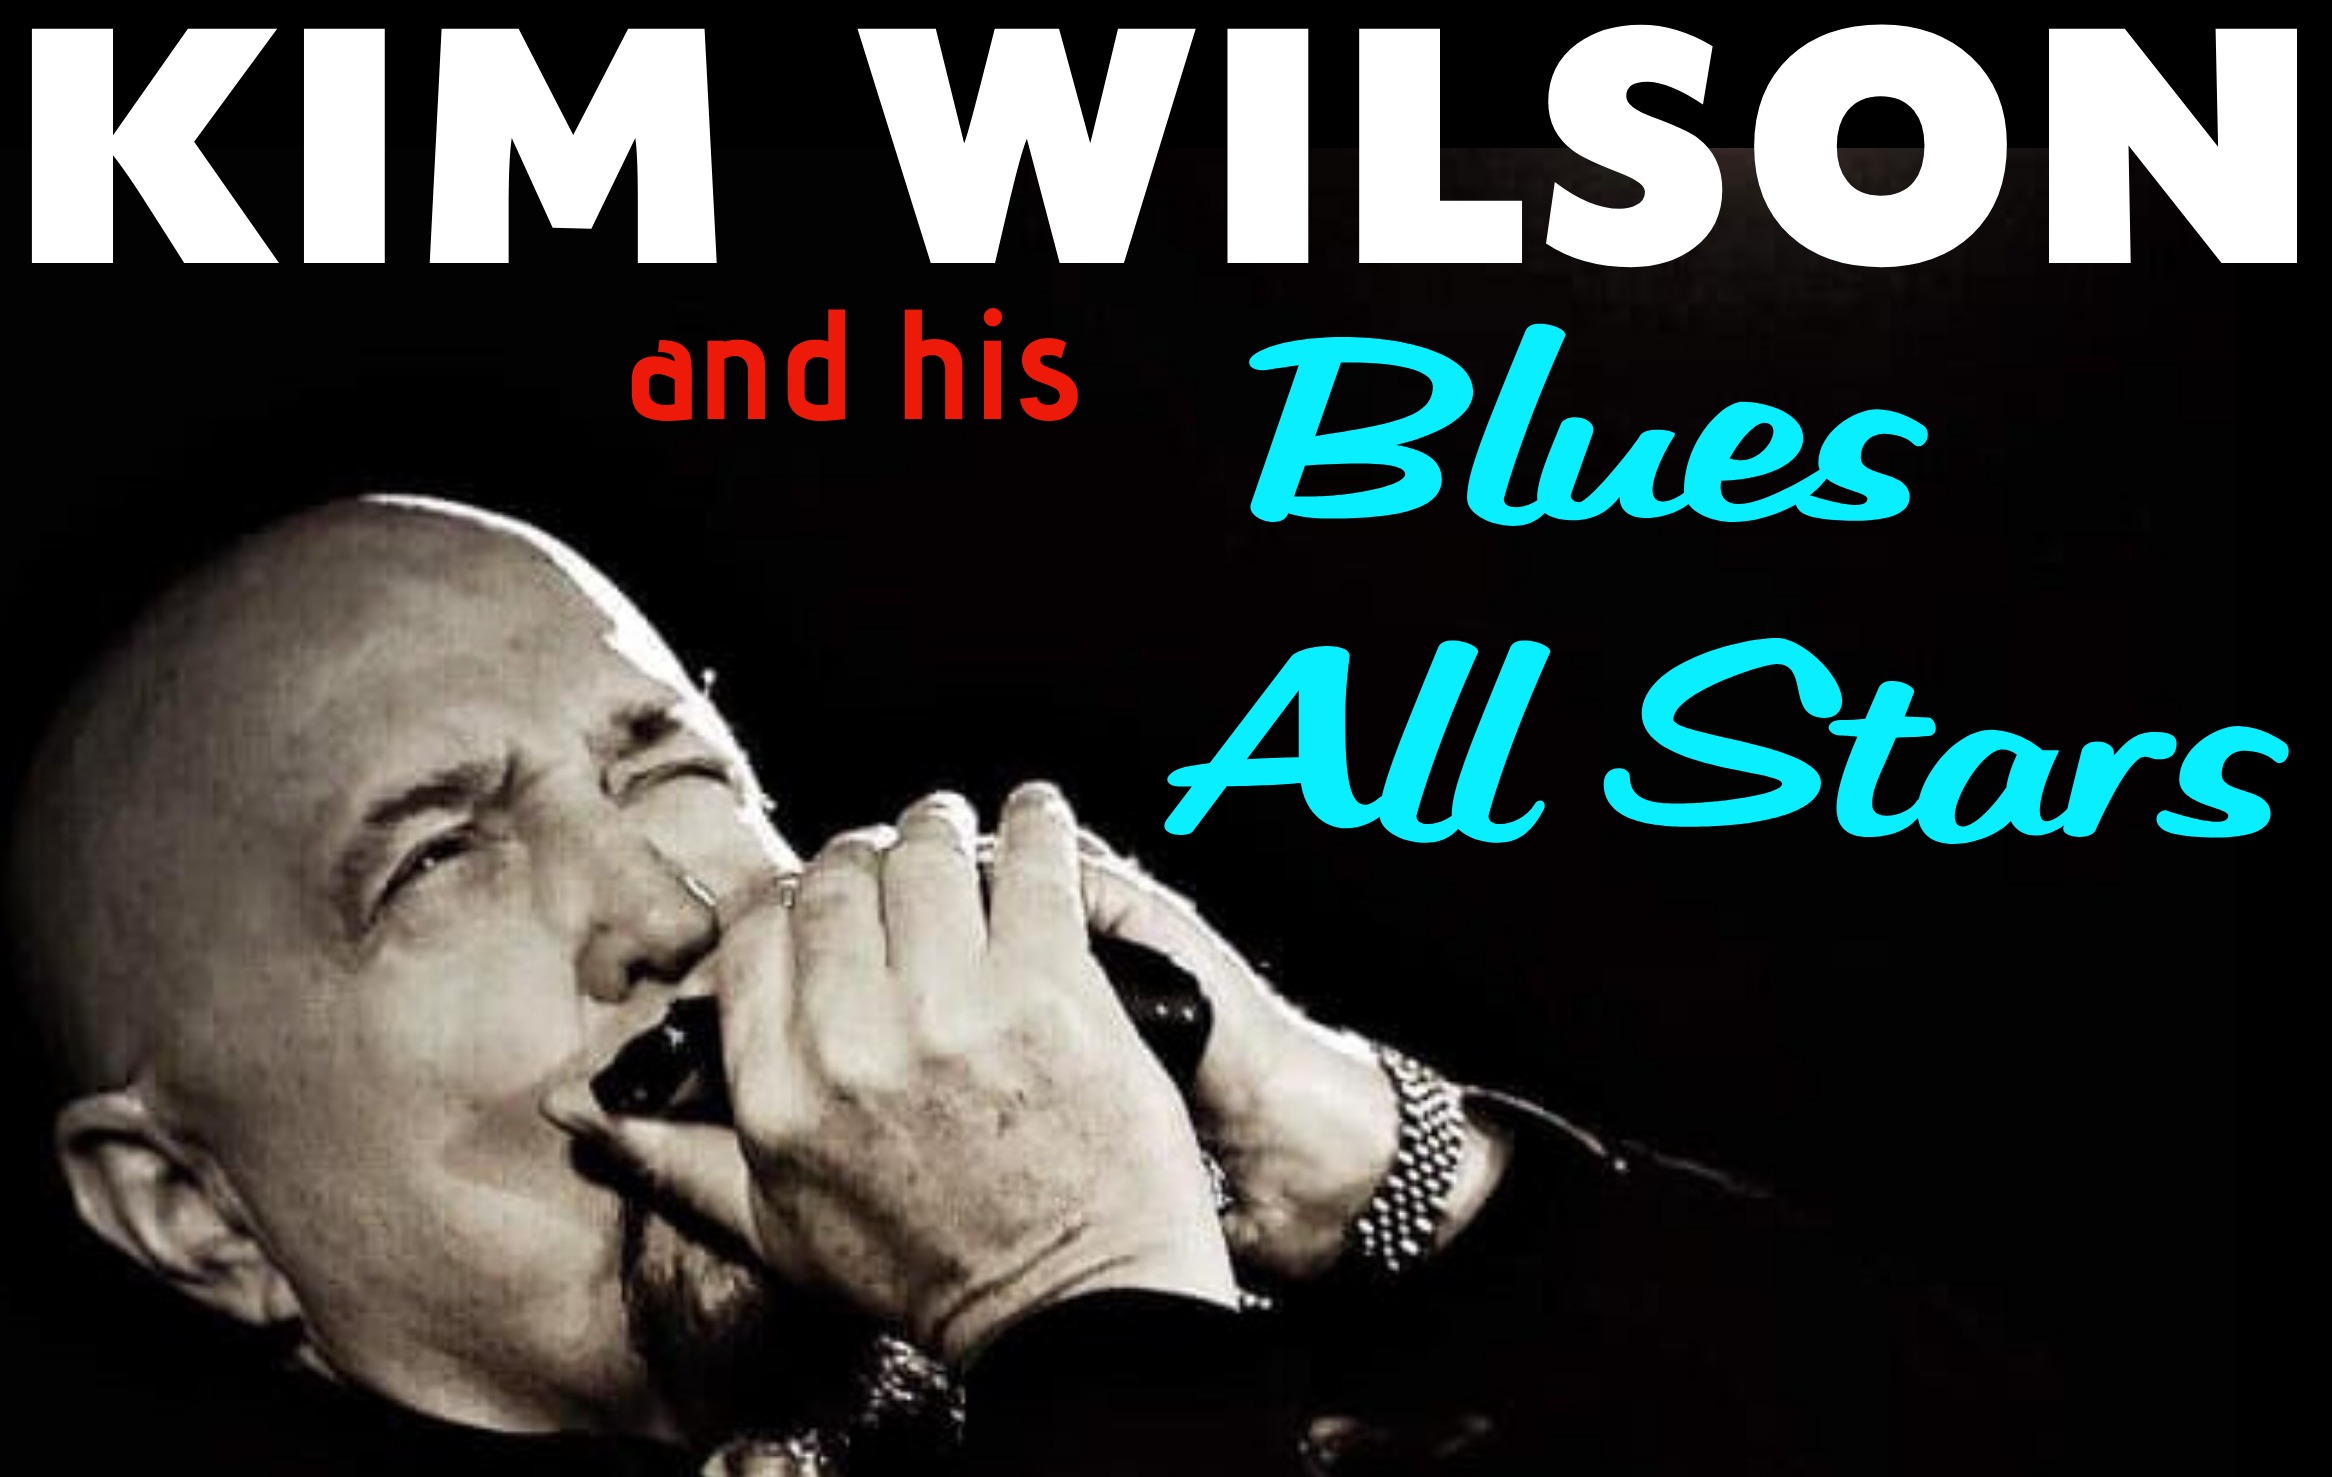 Kim Wilson and his Blues AllStars